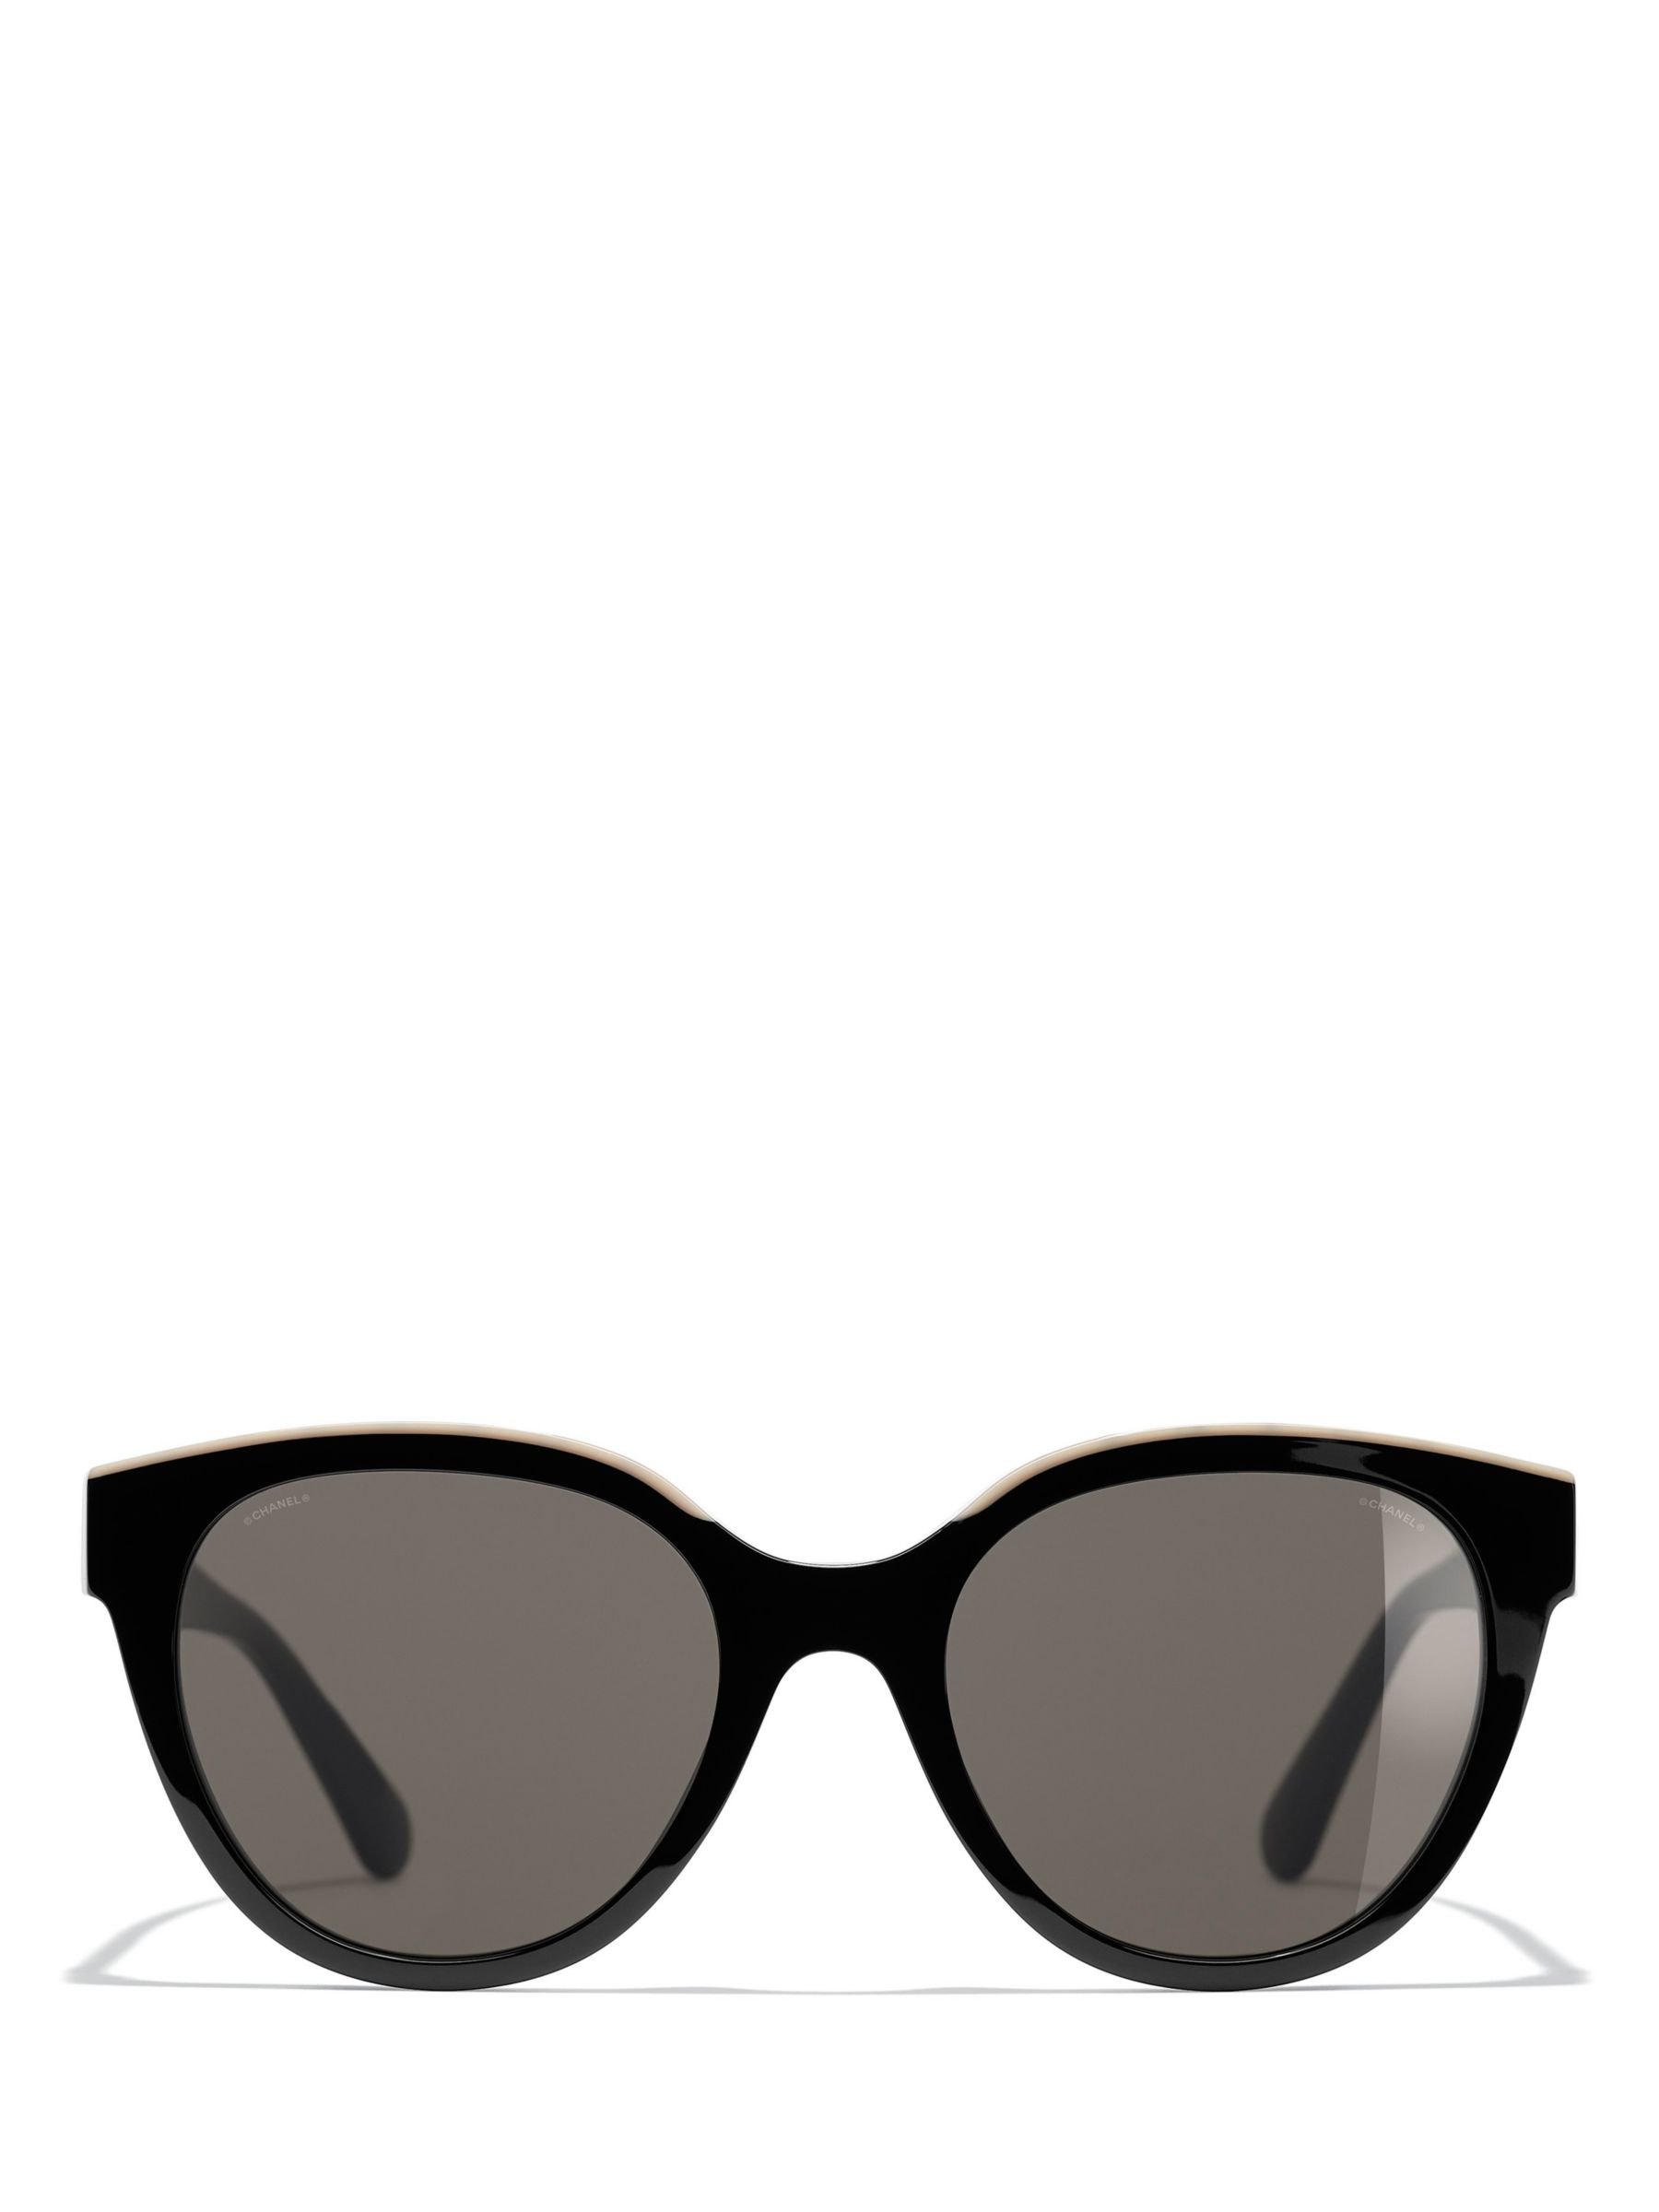 Brandname Sunglasses on Instagram: Chanel Butterfly CH5414 Black